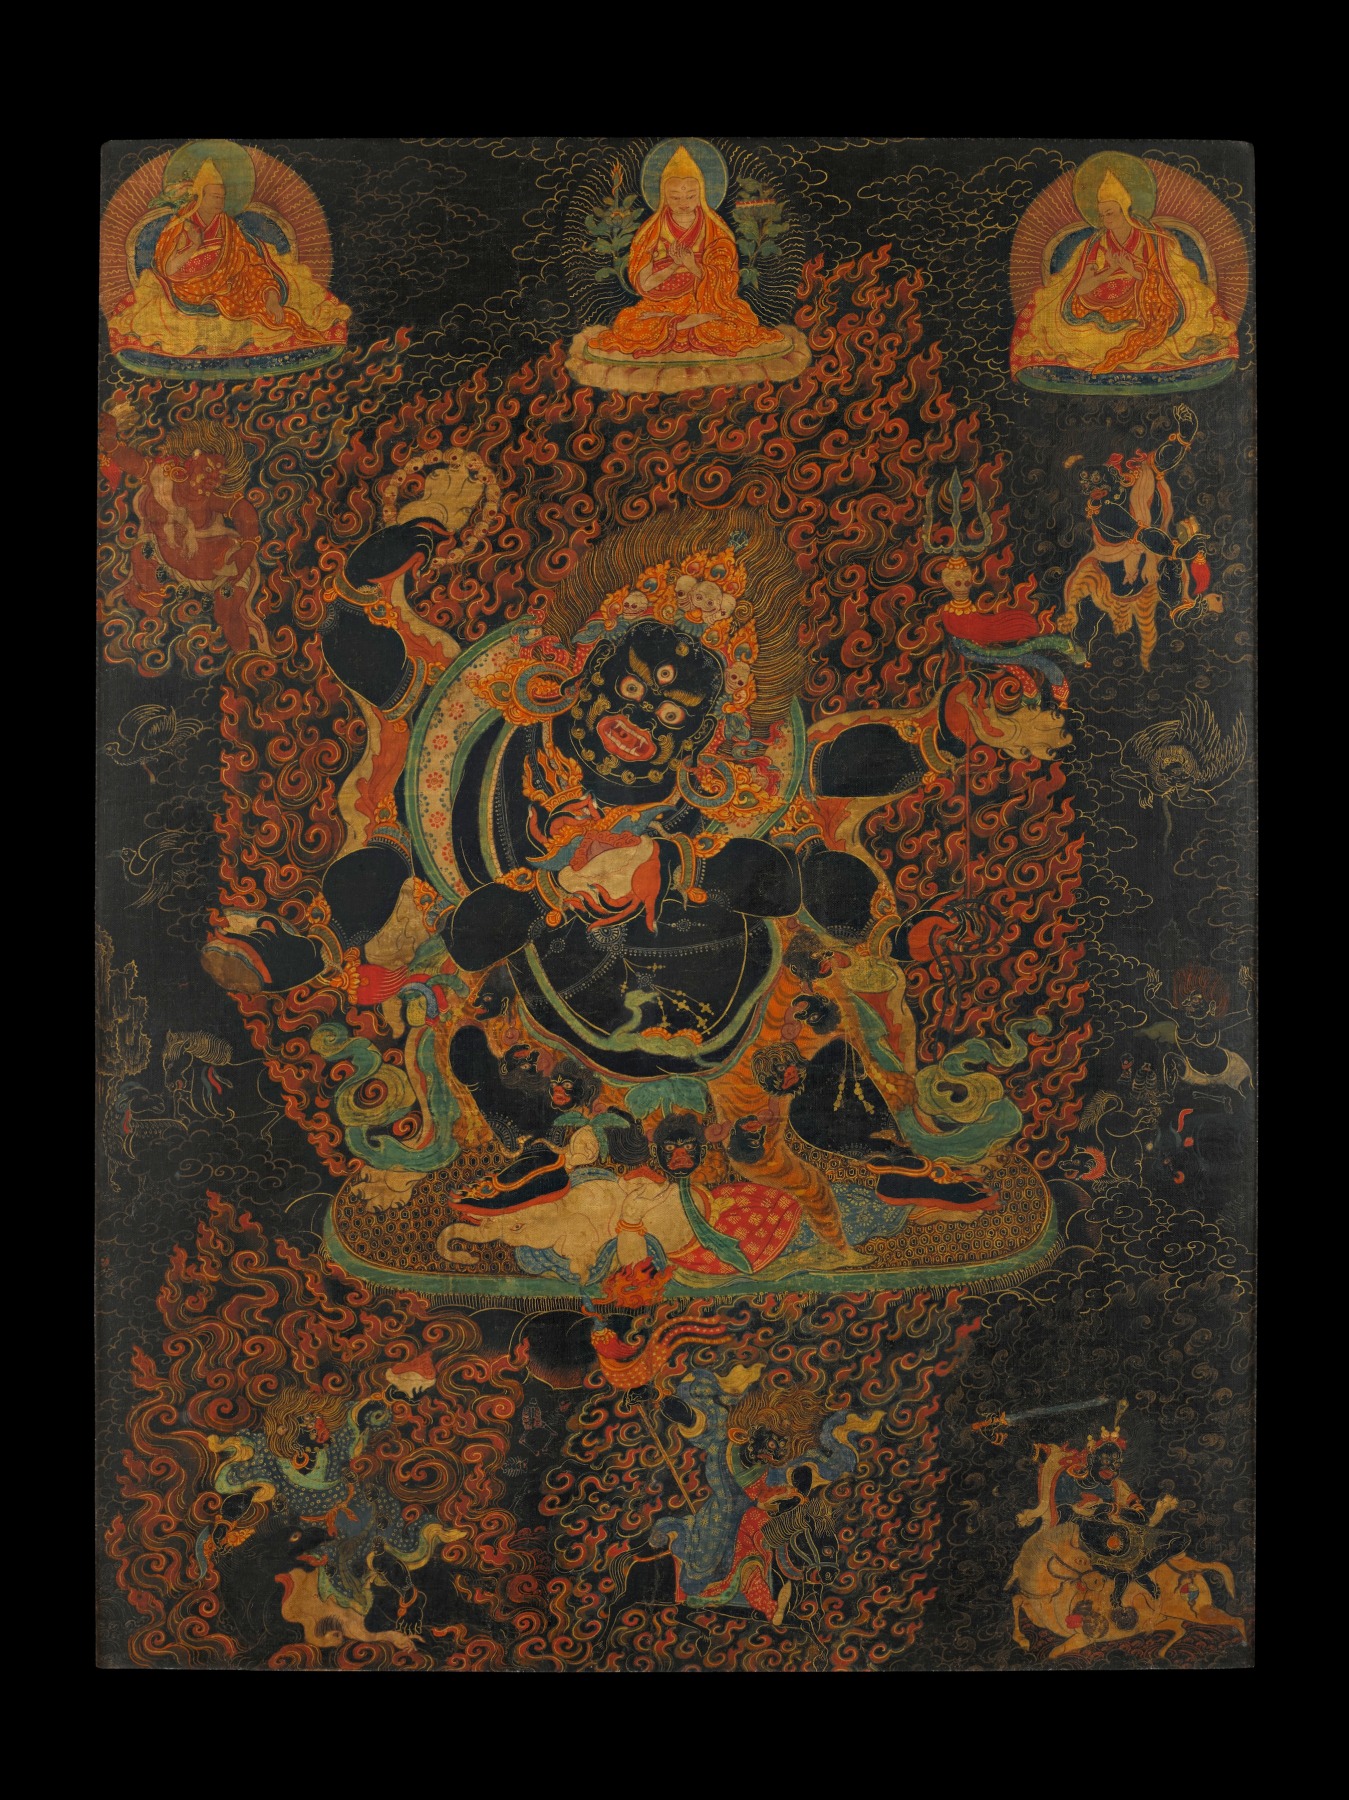 Large image of six-armed Mahakala